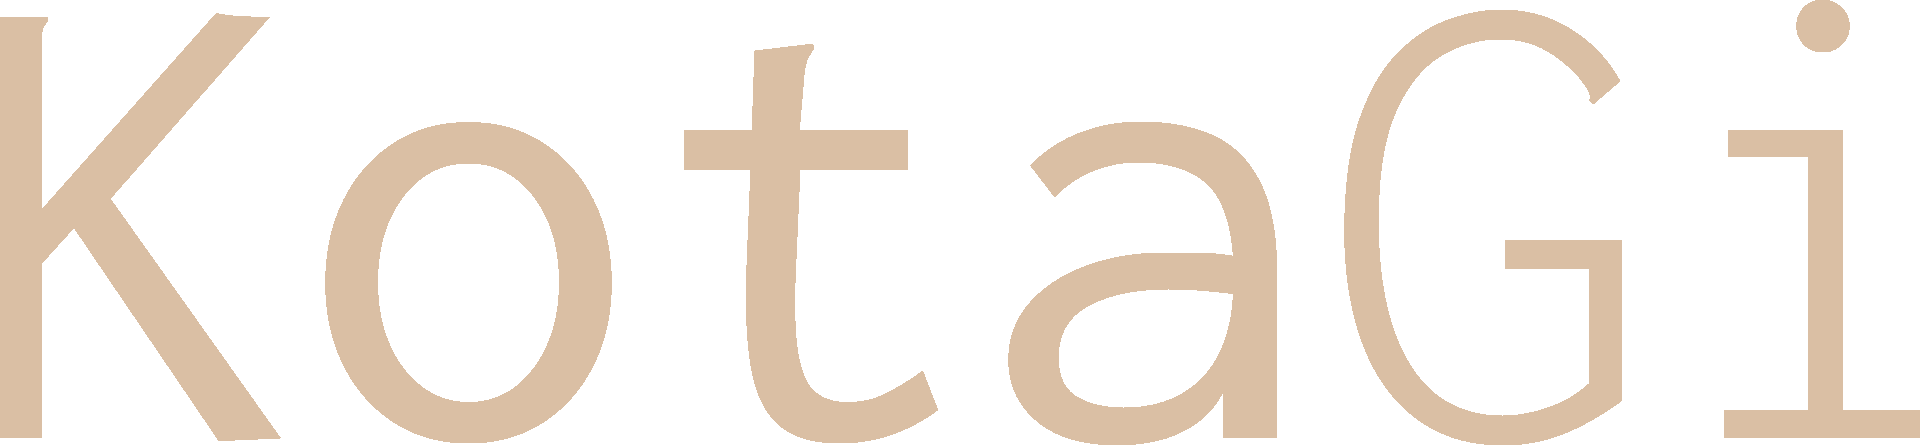 KotaGi logo